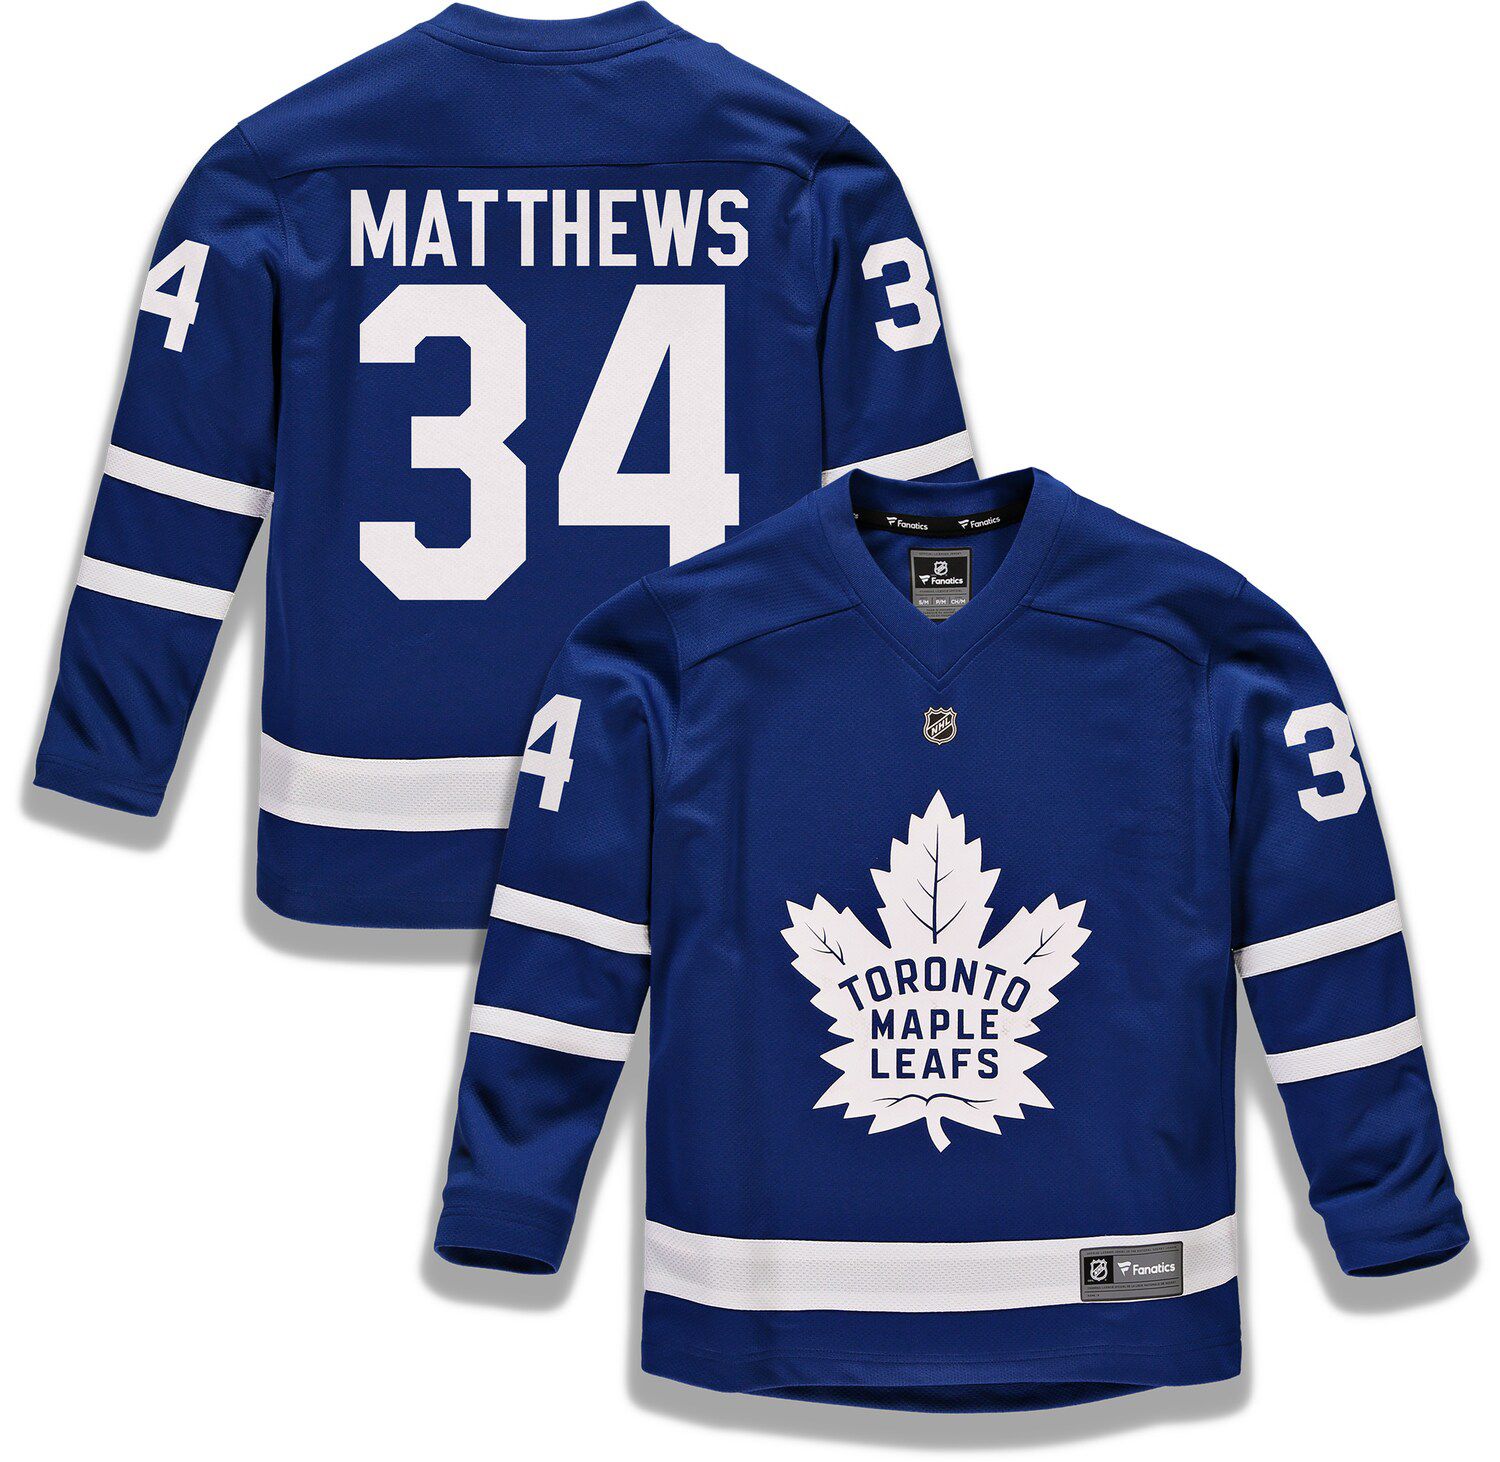 Toronto Maple Leafs Replica Player Jersey